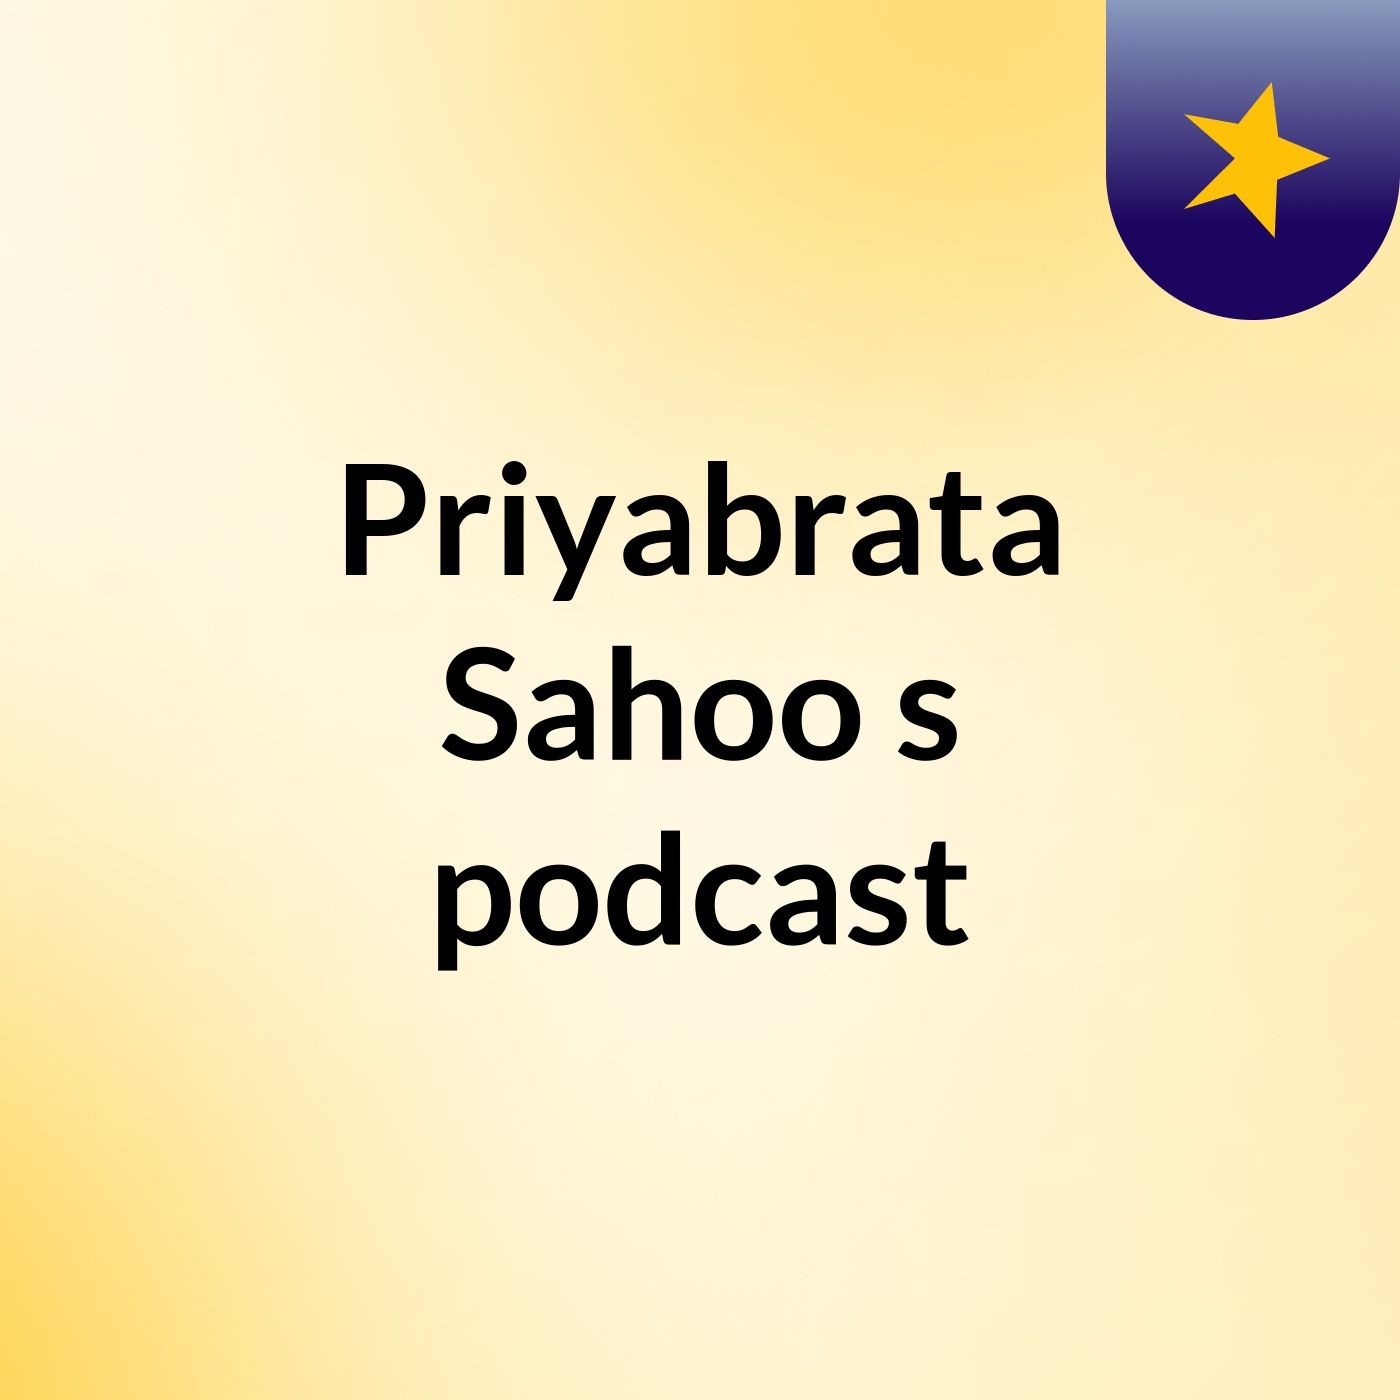 Priyabrata Sahoo's podcast